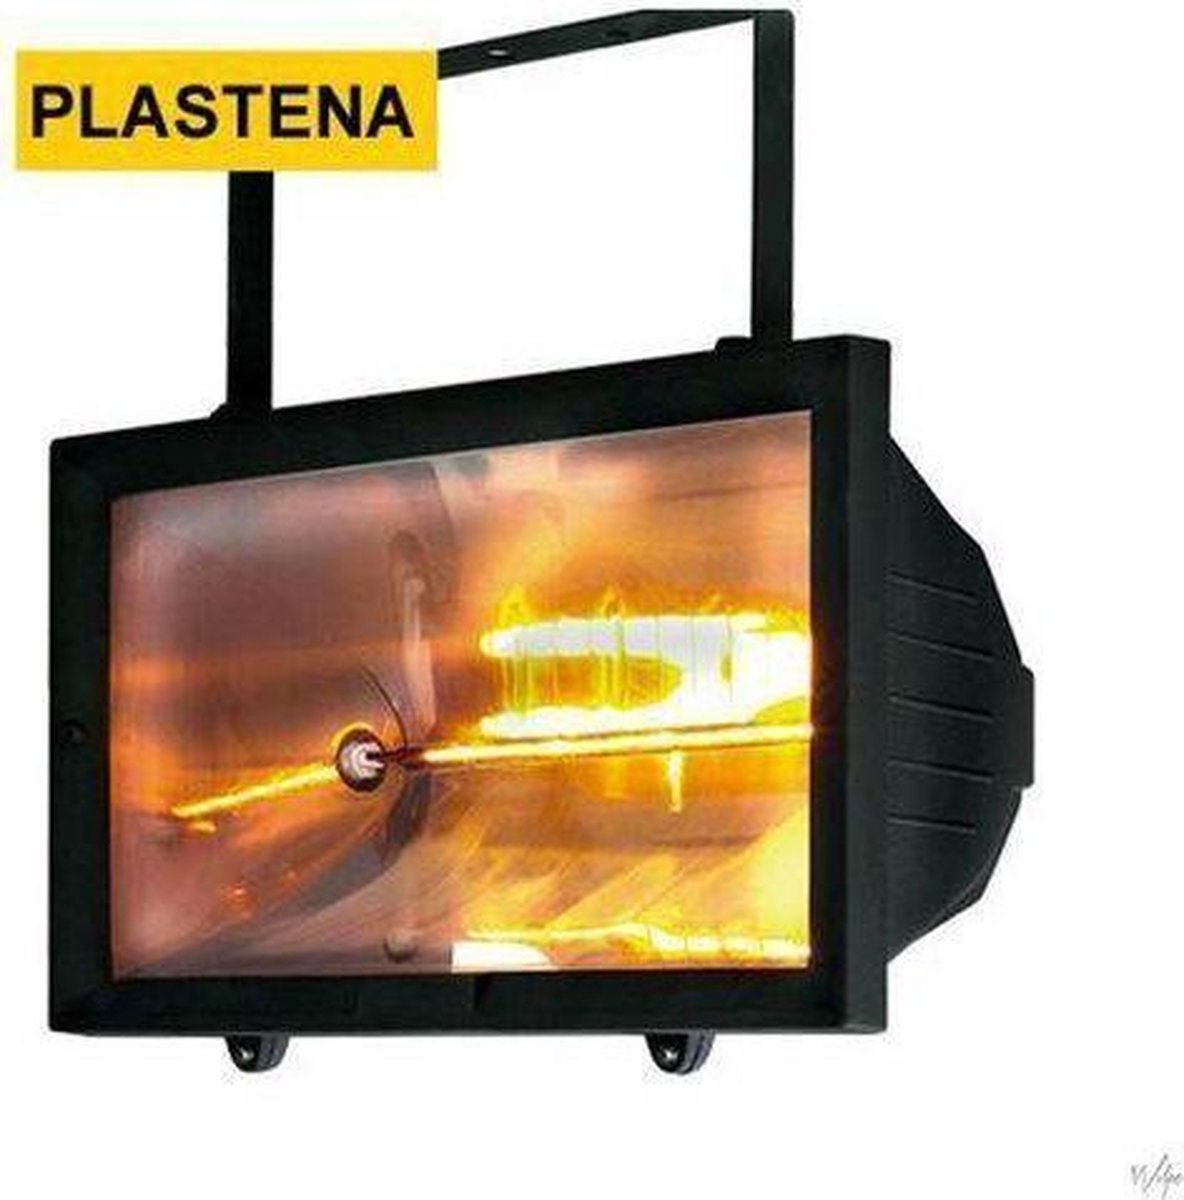 Plastena Terrasverwarmer Infrarood Warmte Heater | bol.com